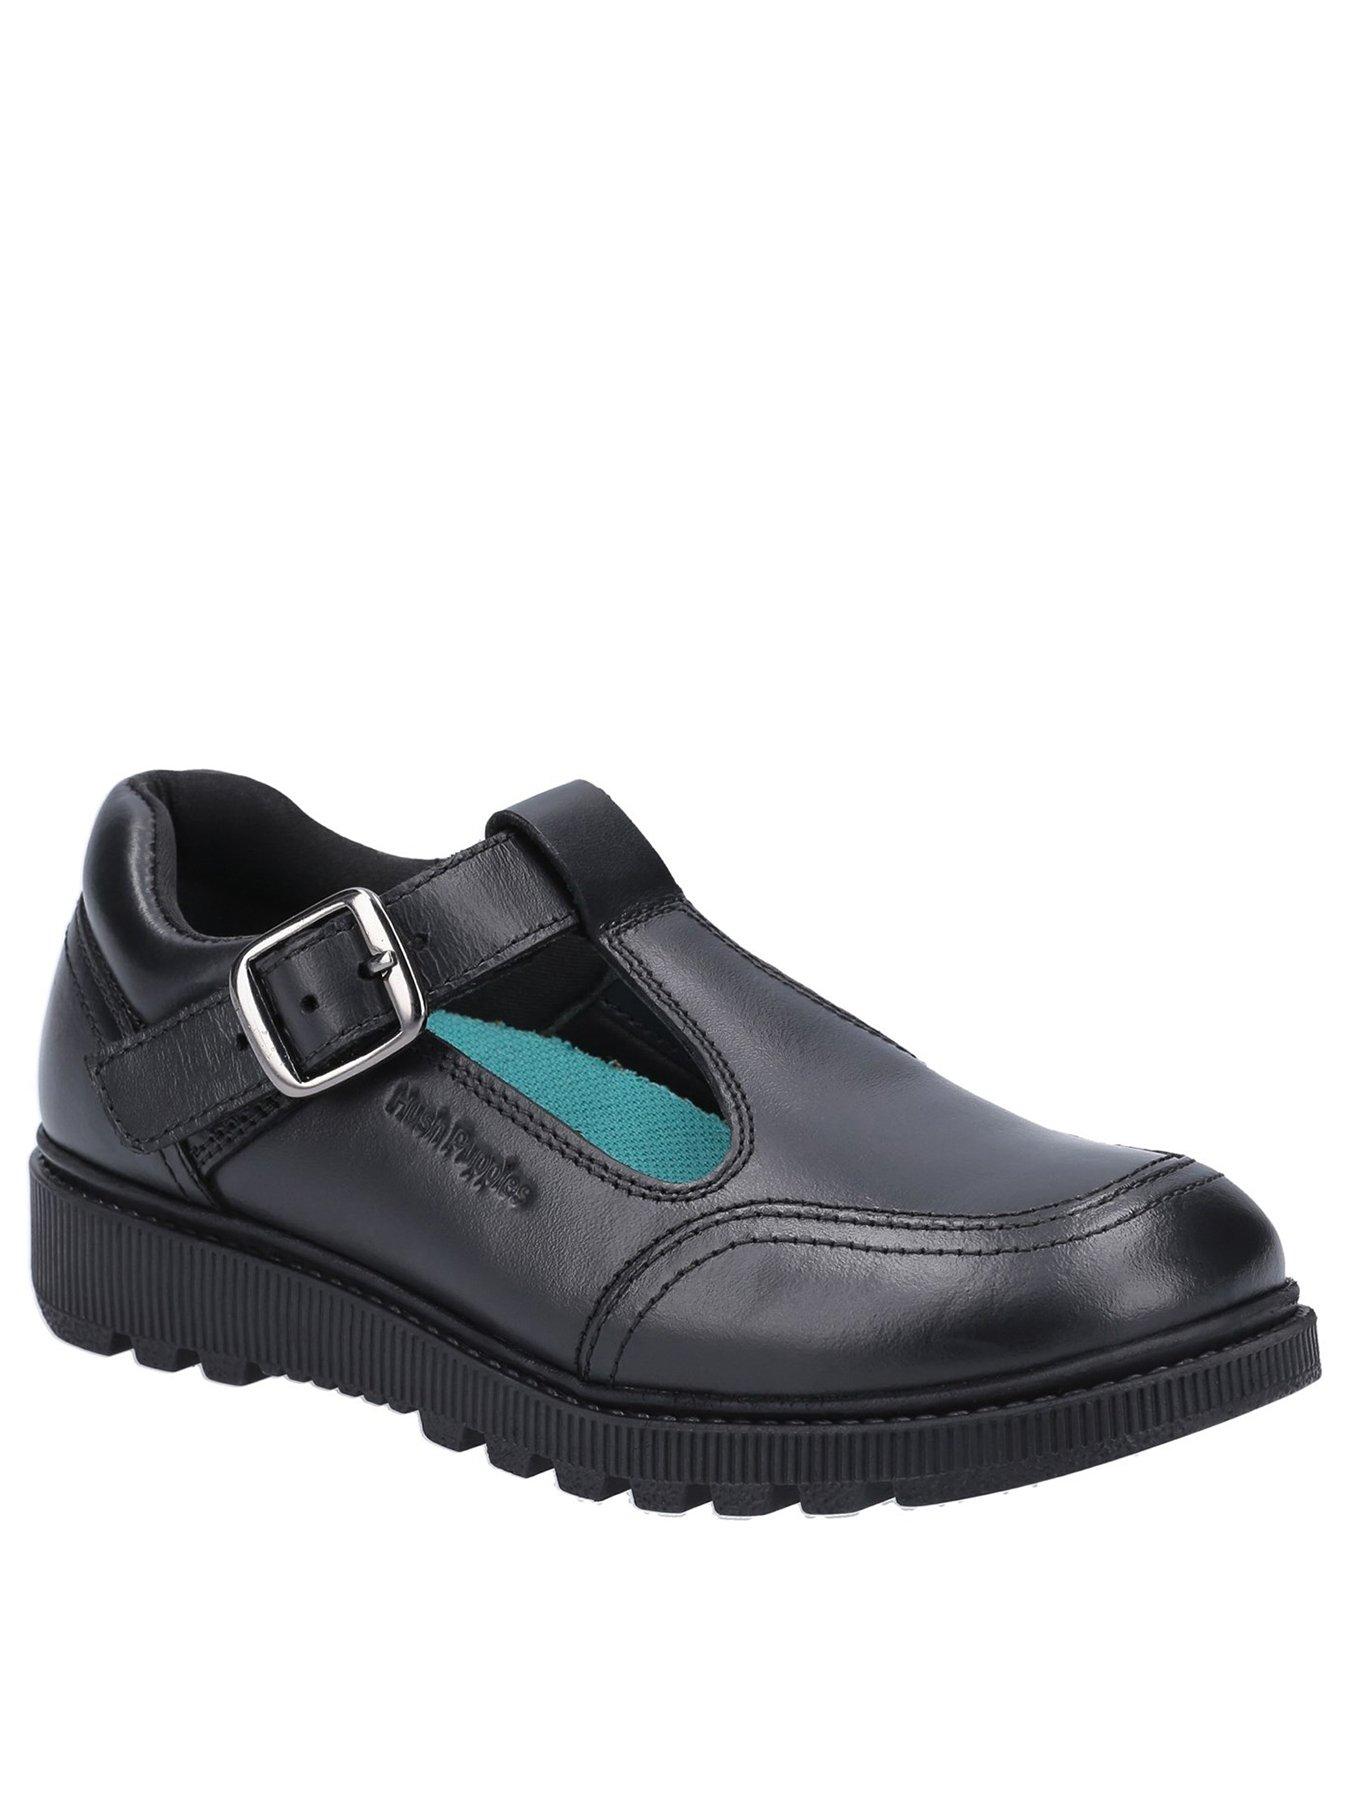 School & uniform Kerry Senior School Shoes - Black